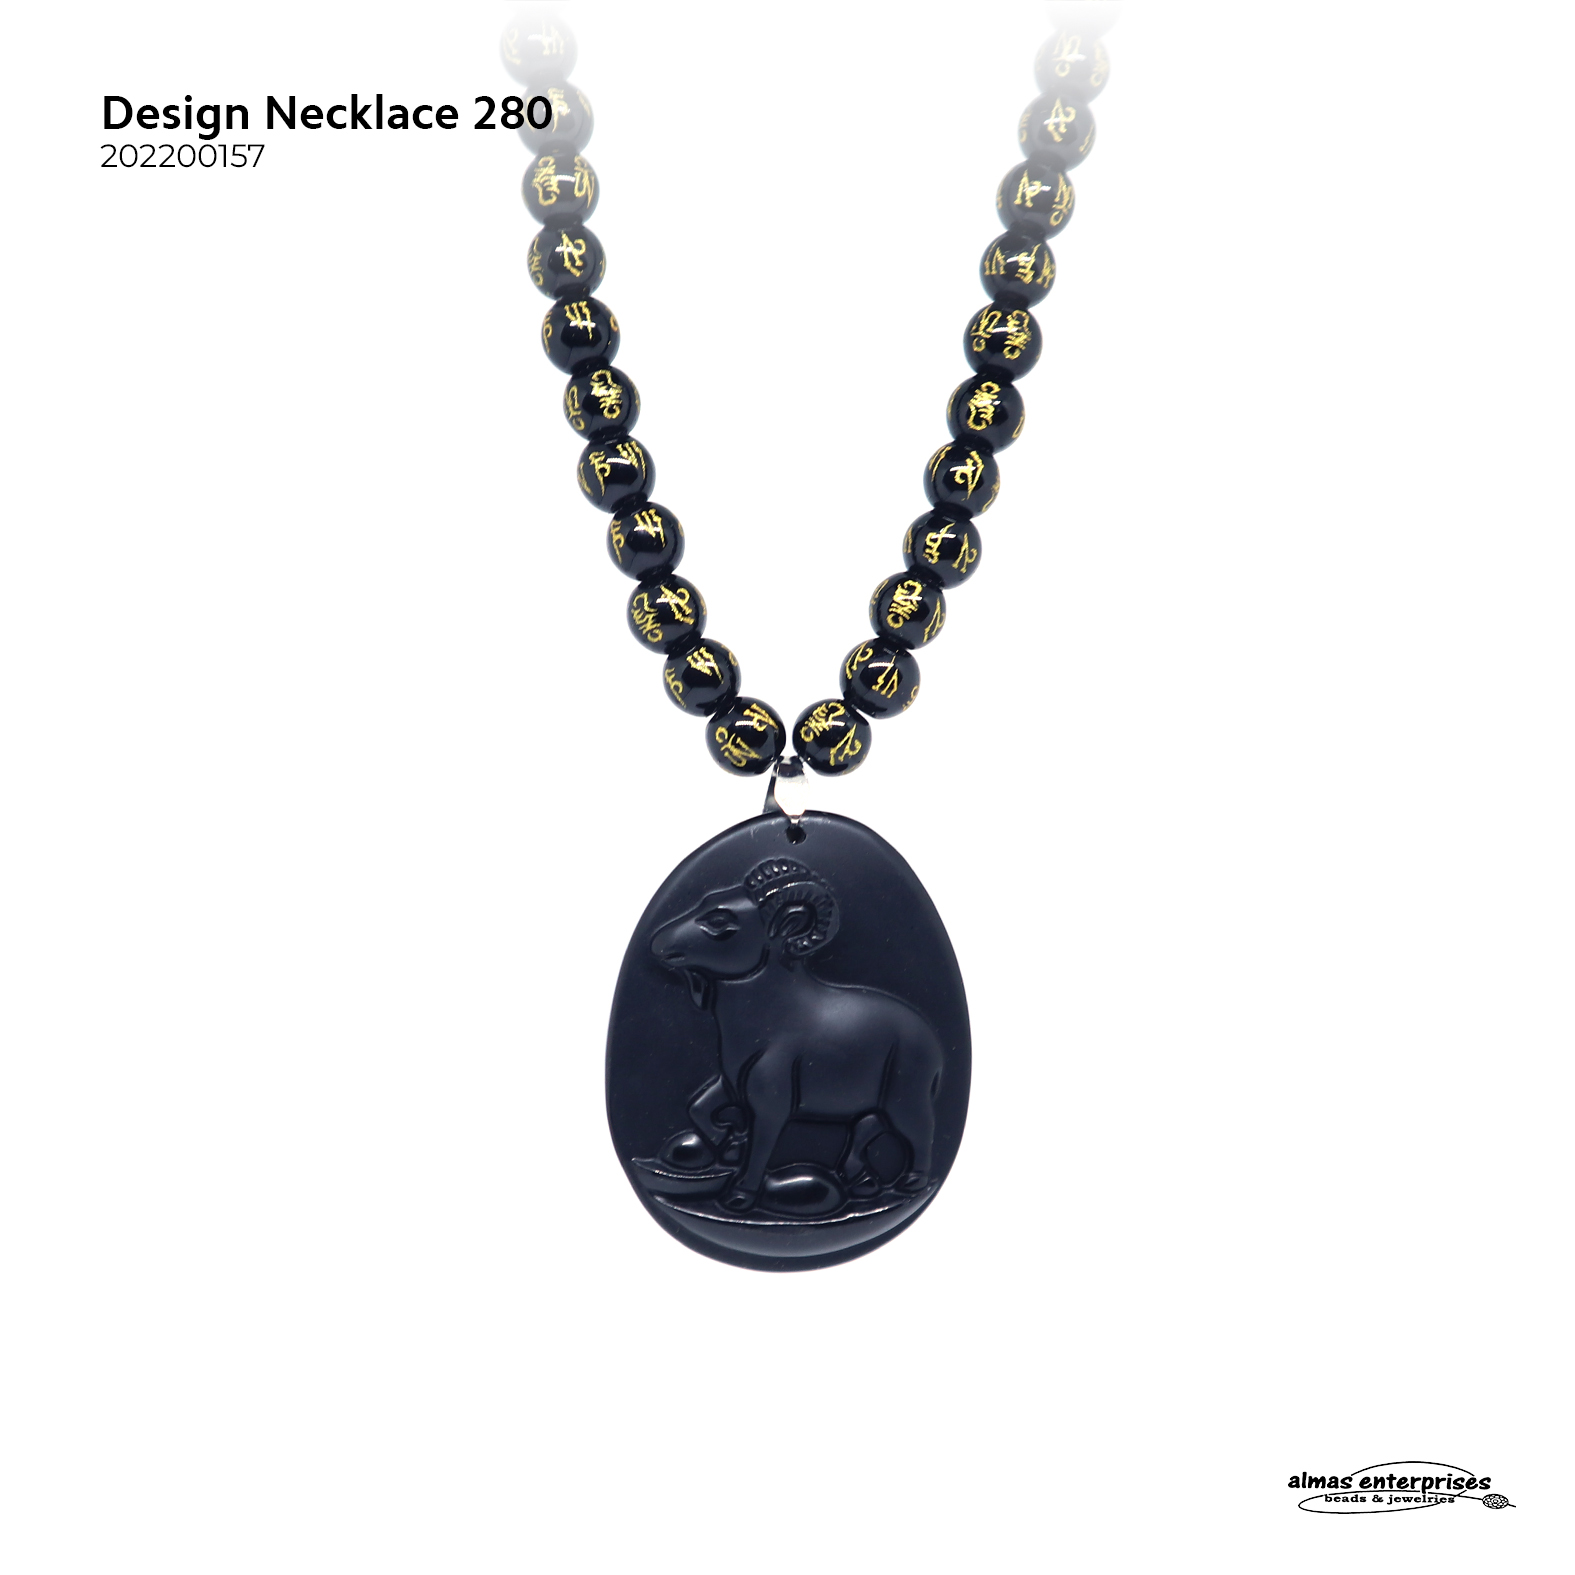 Design Necklace 280